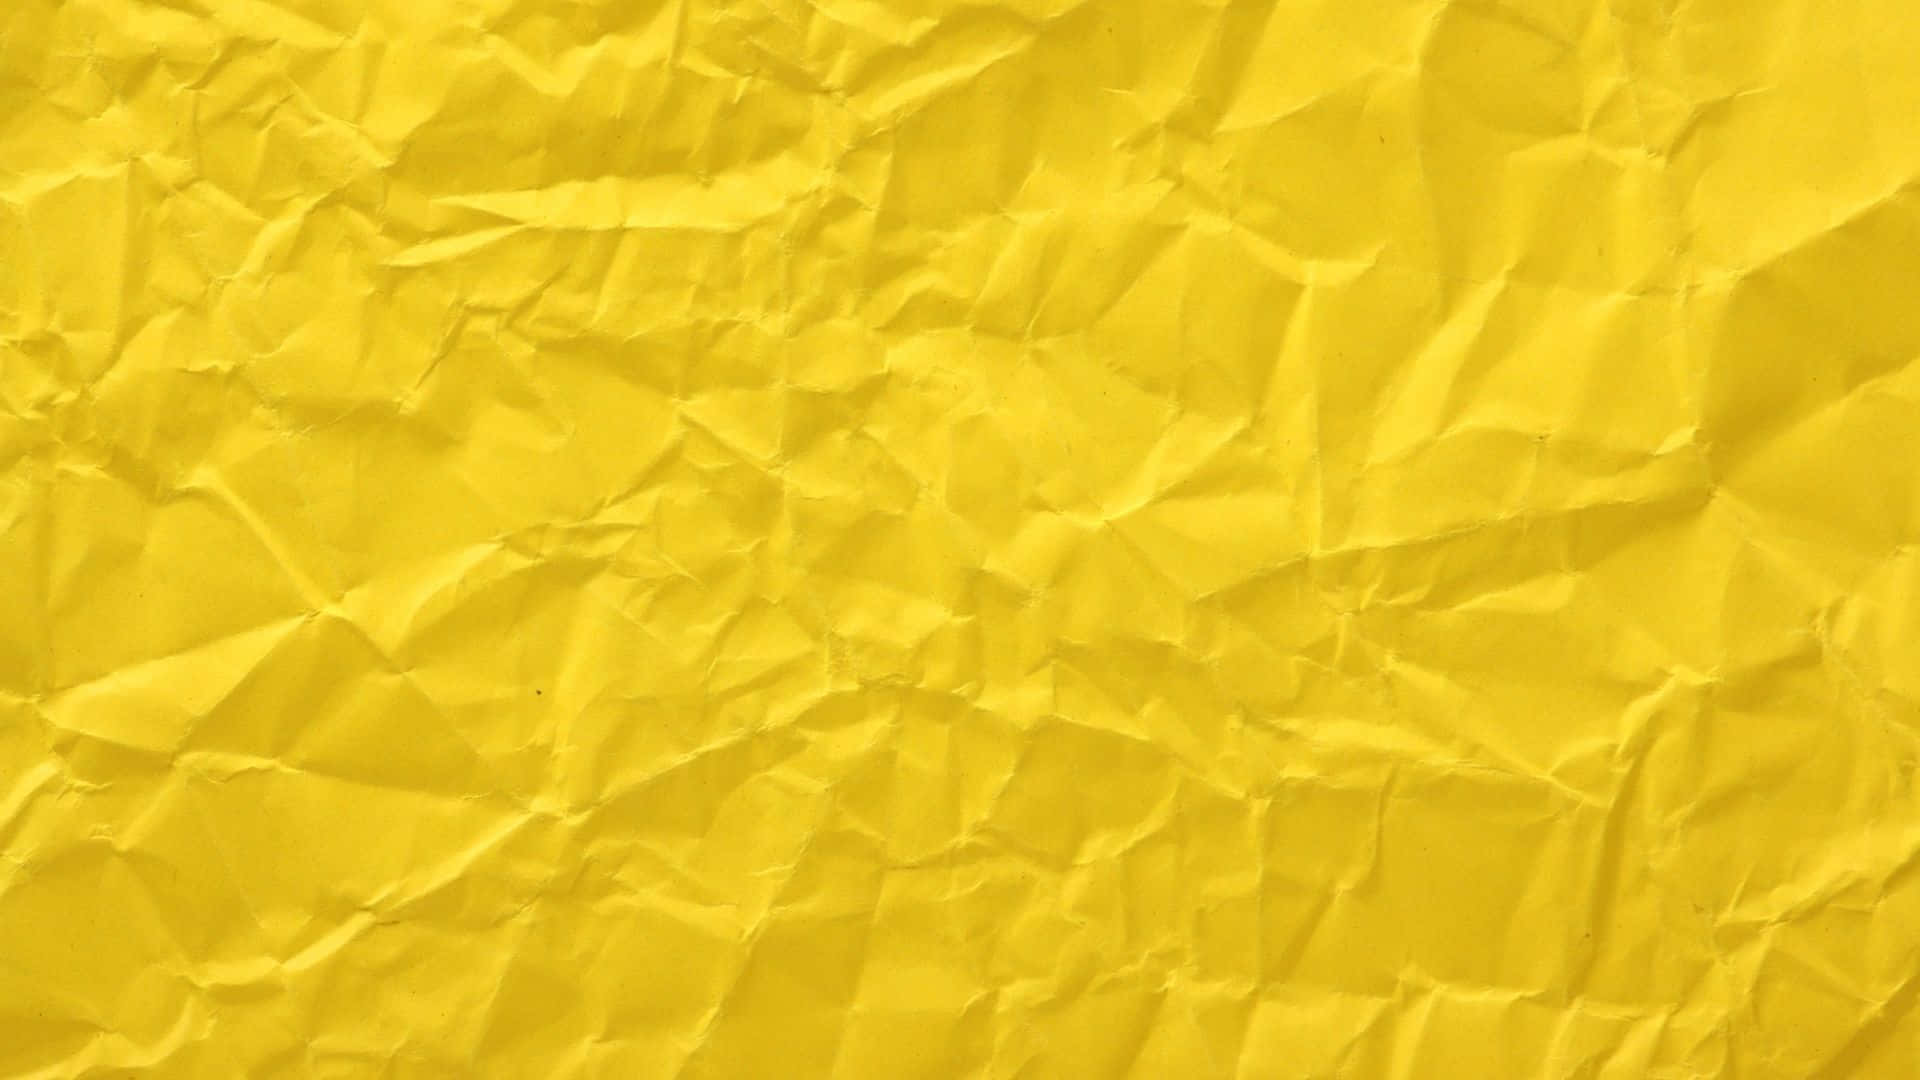 Texturade Papel Amarelo Para Fundo De Tela De Computador Ou Celular.